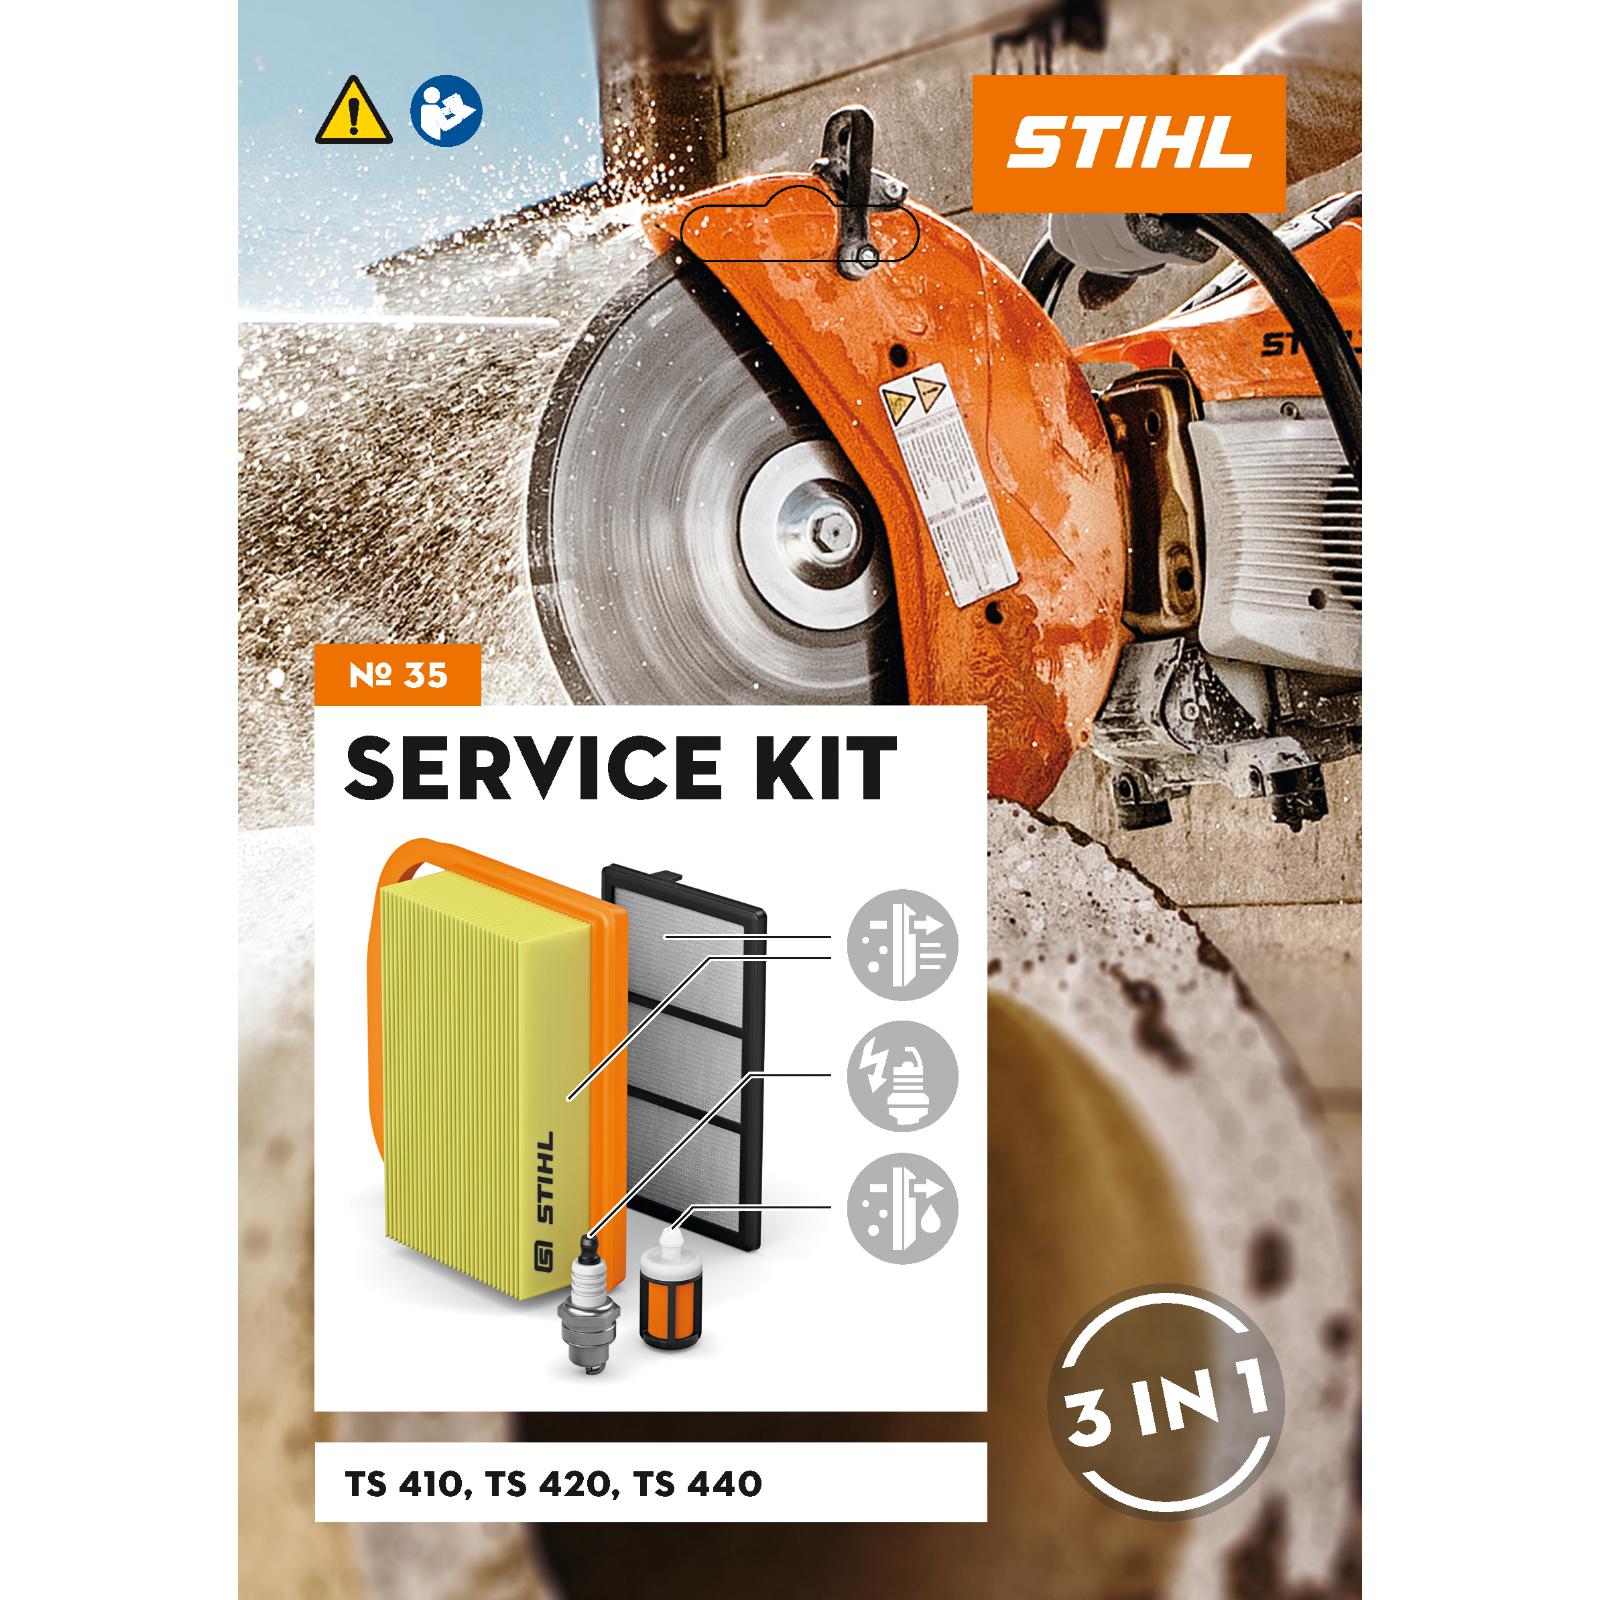 Service Kit for TS420/TS440 (No.35) Stihl-Service Kit-STIHL-diyshop.co.za